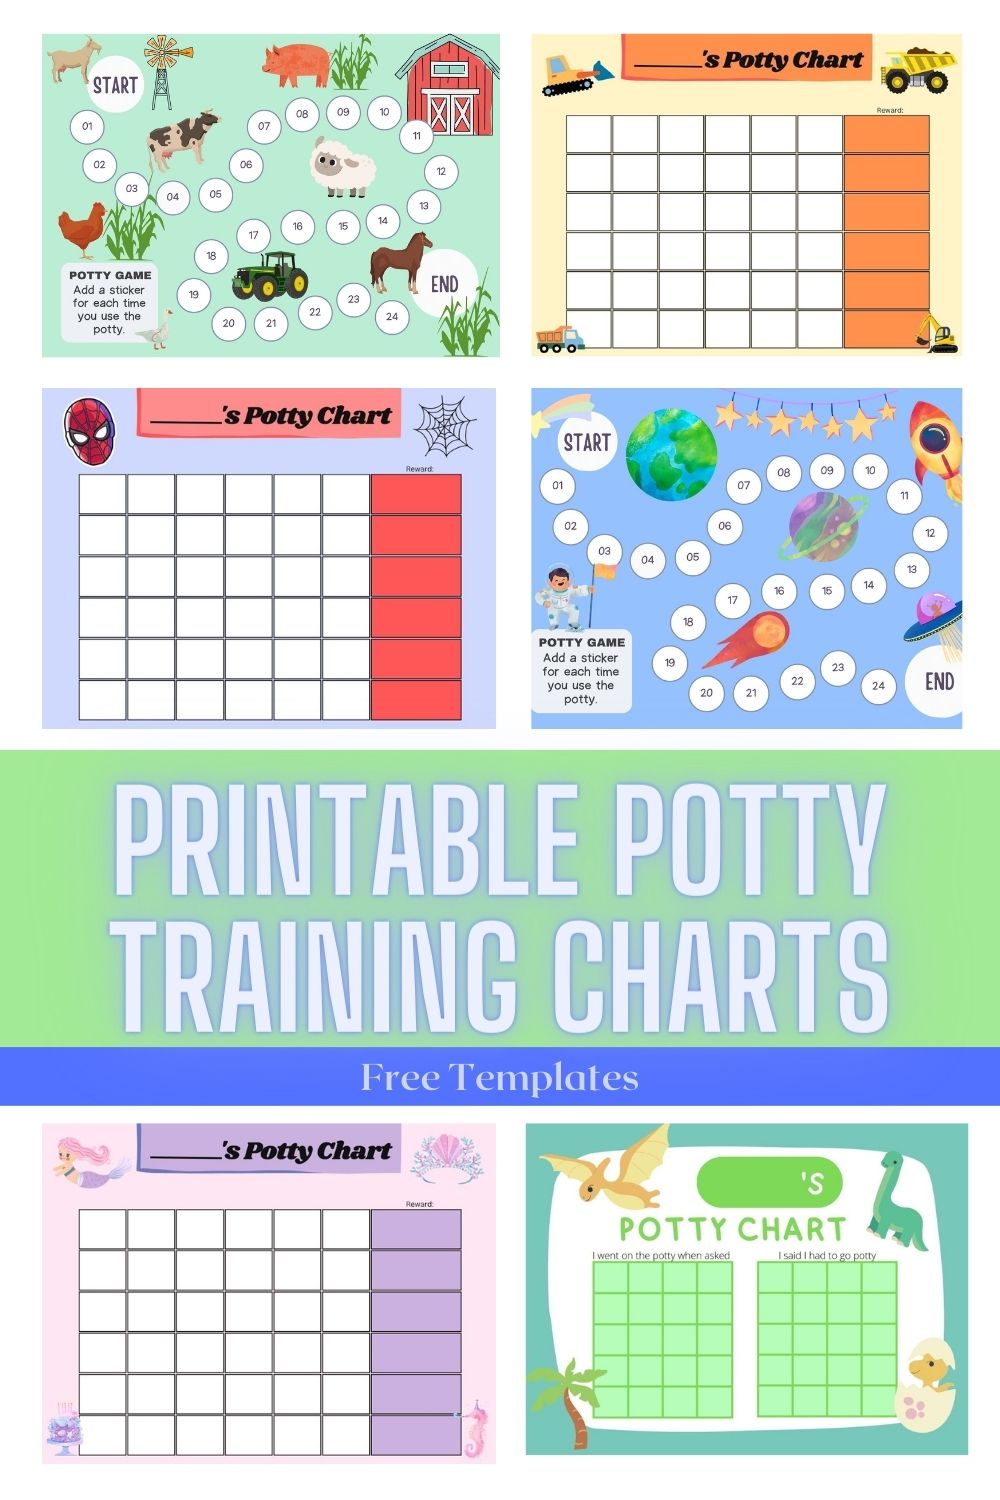 Printable Potty Training Charts PDF Free Template